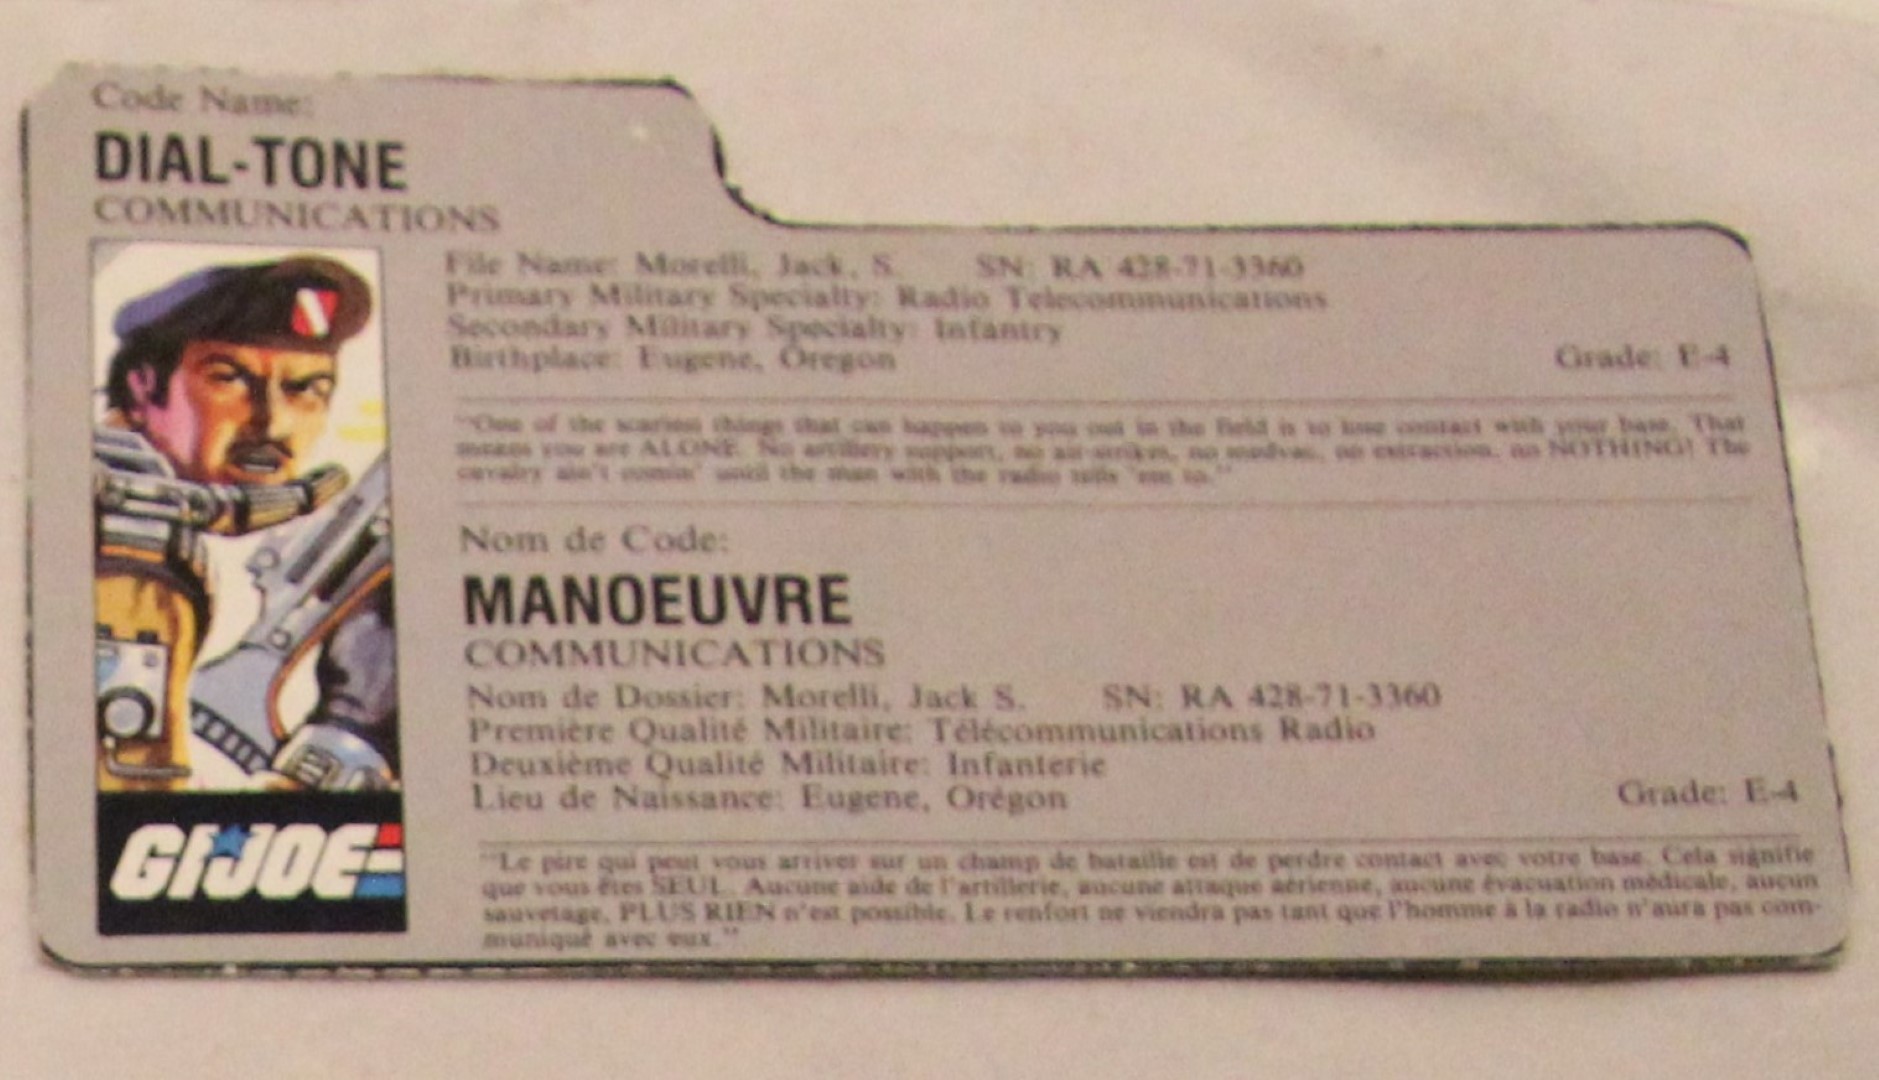 1986 dial tone file card